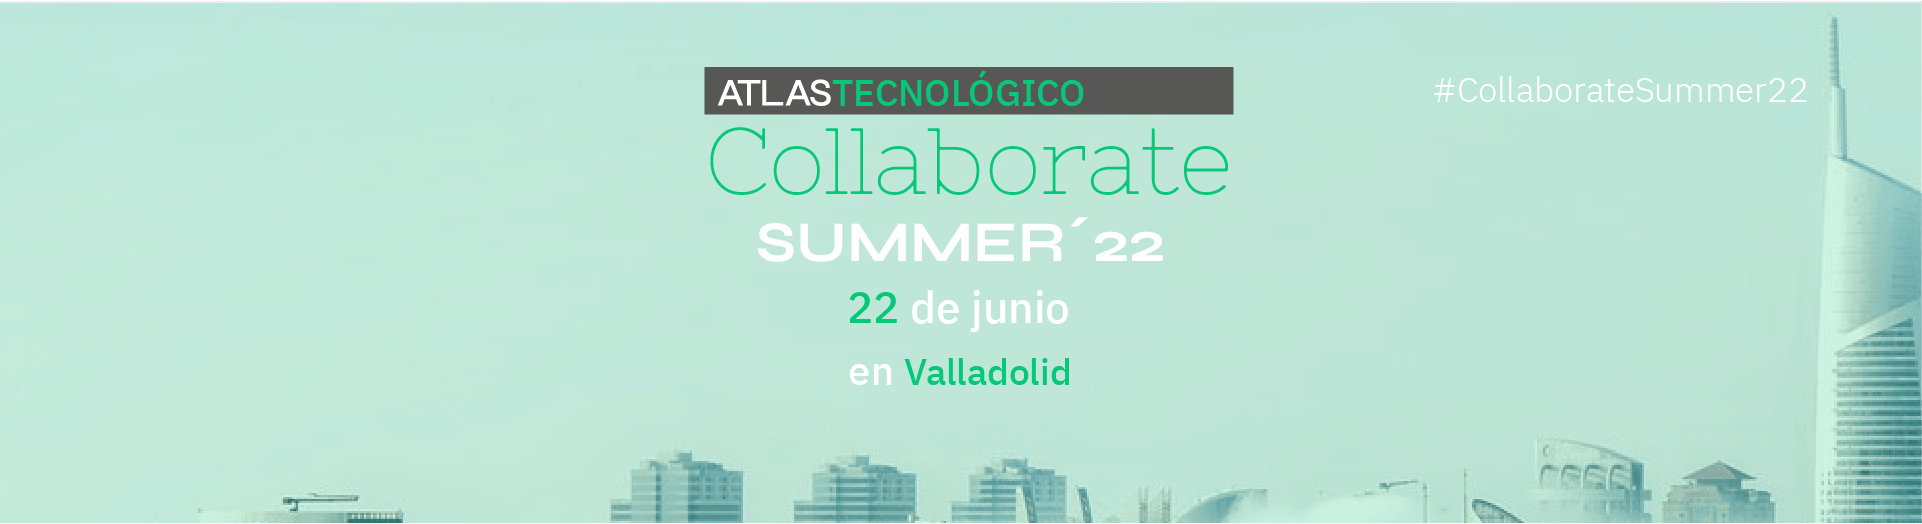 Atlas Tecnológico Collaborate